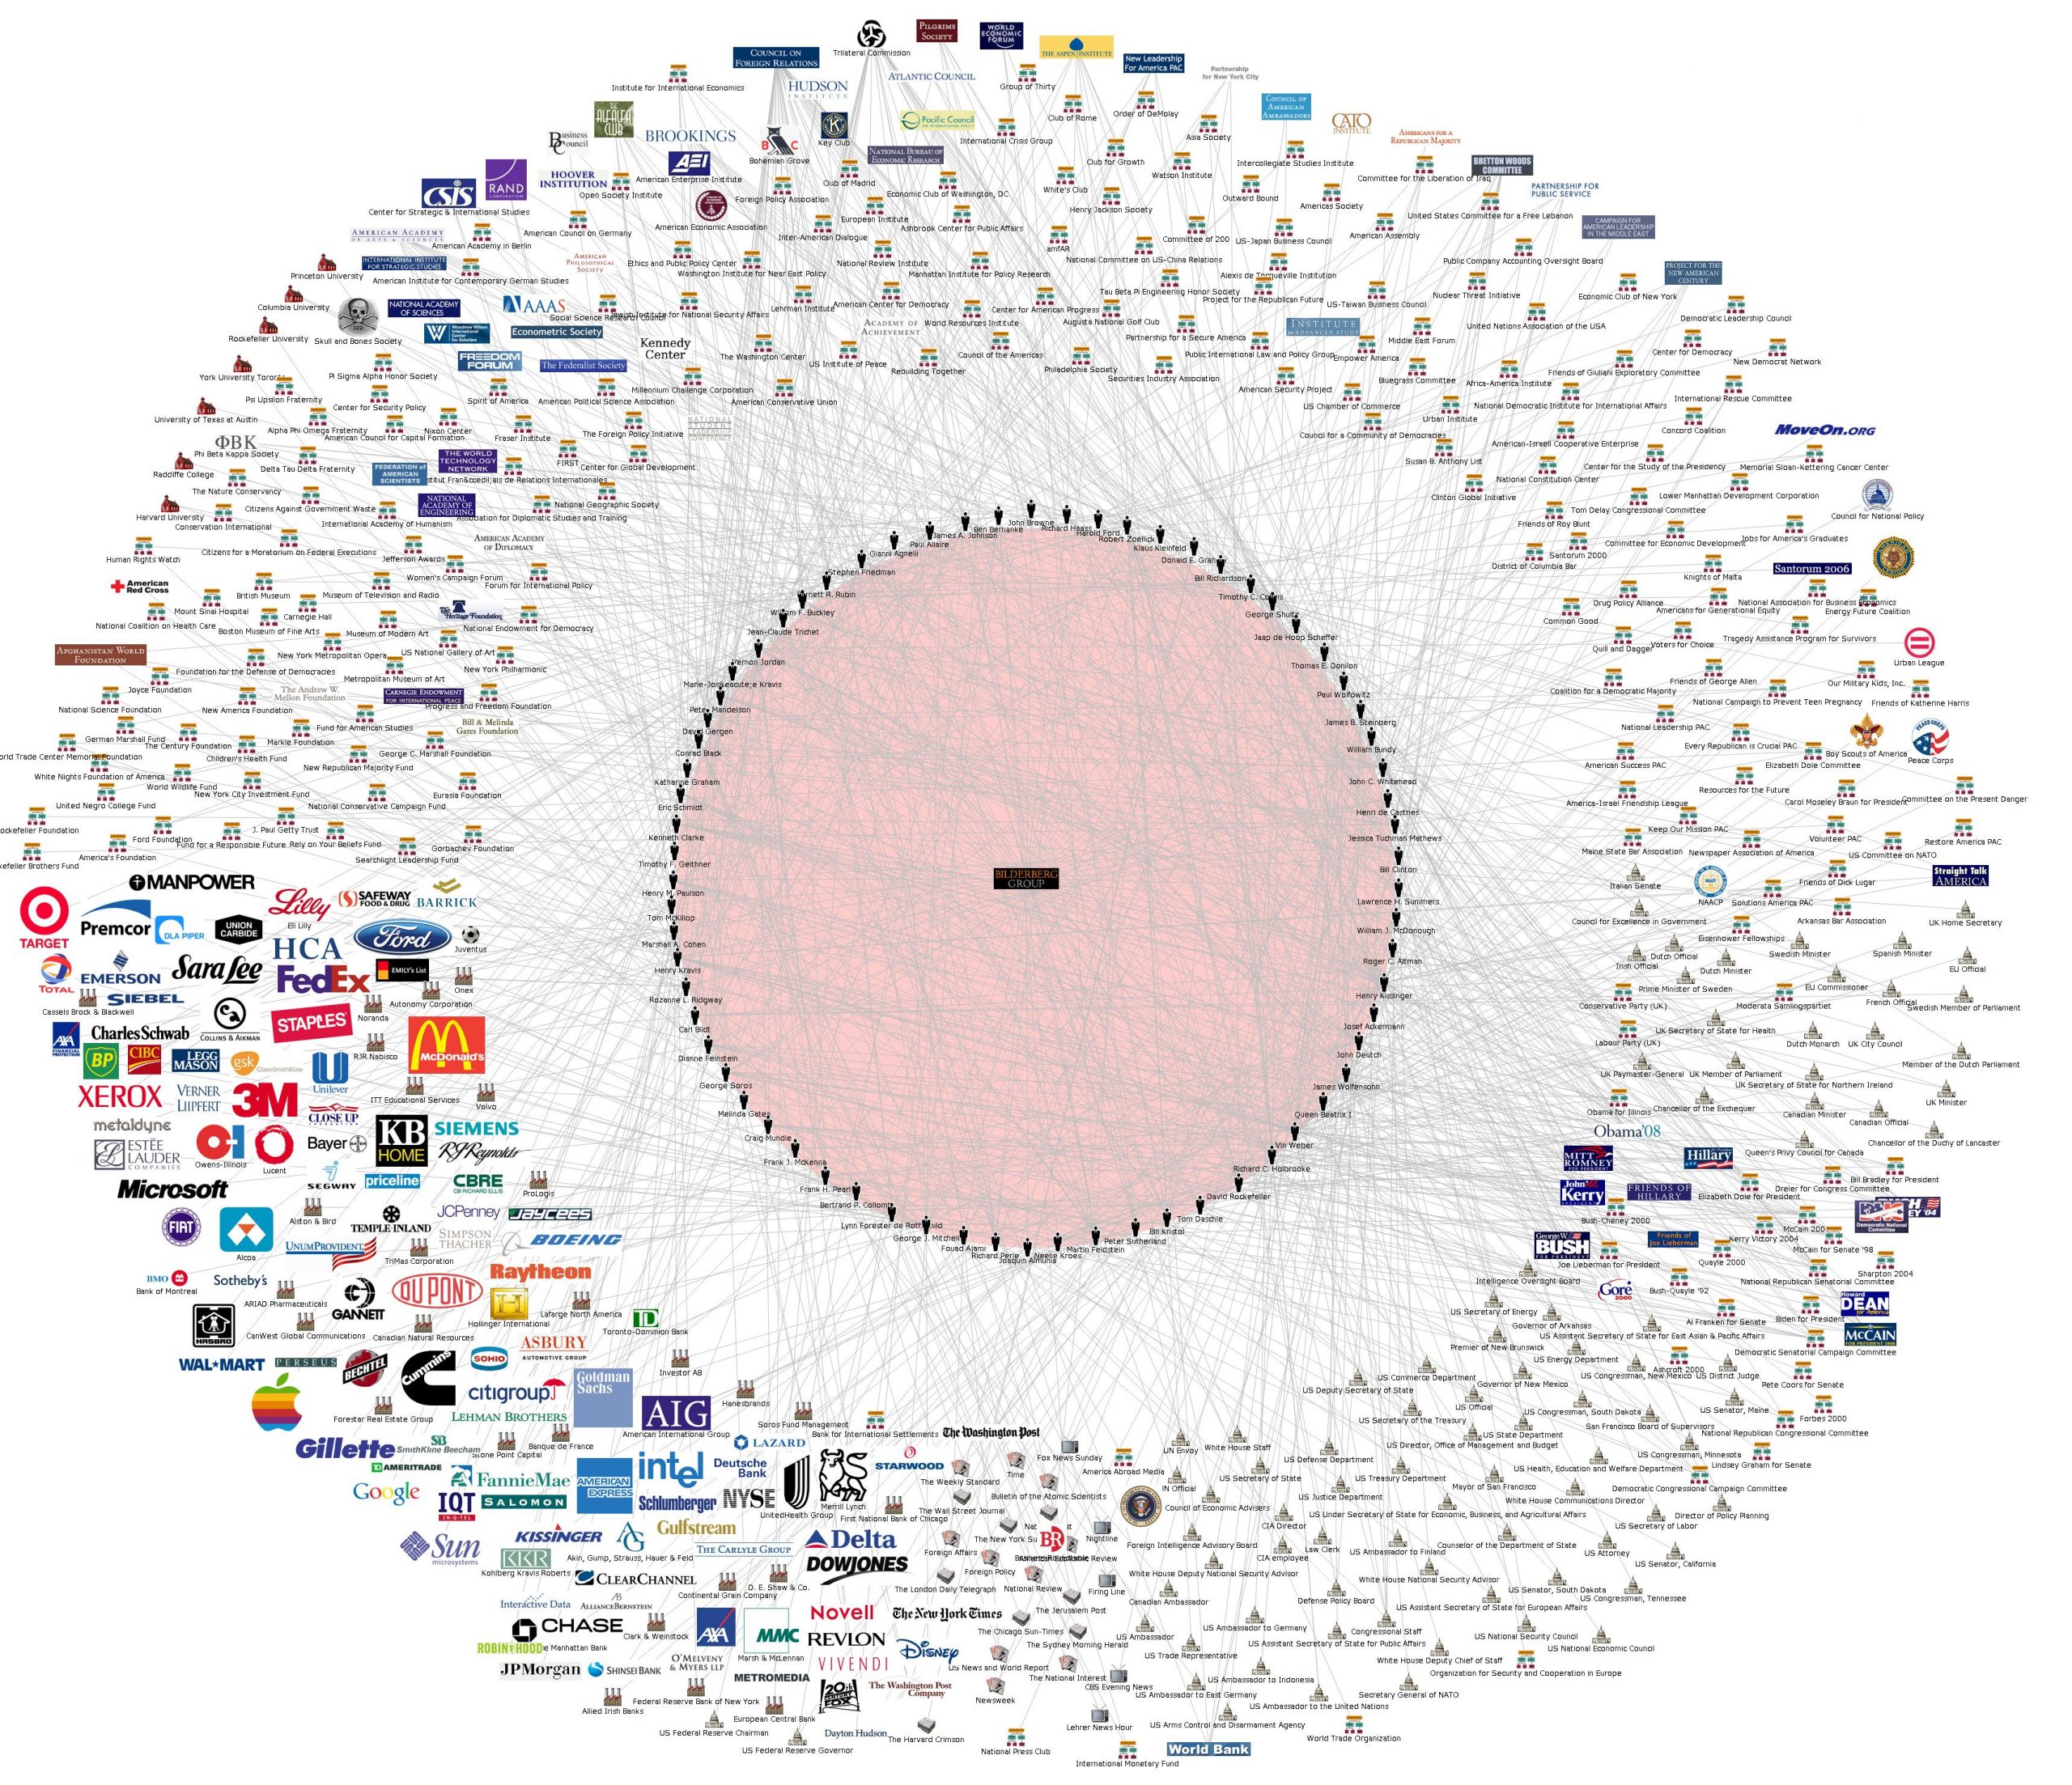 Bilderberg Group chart | Bilerbergergruppen karta